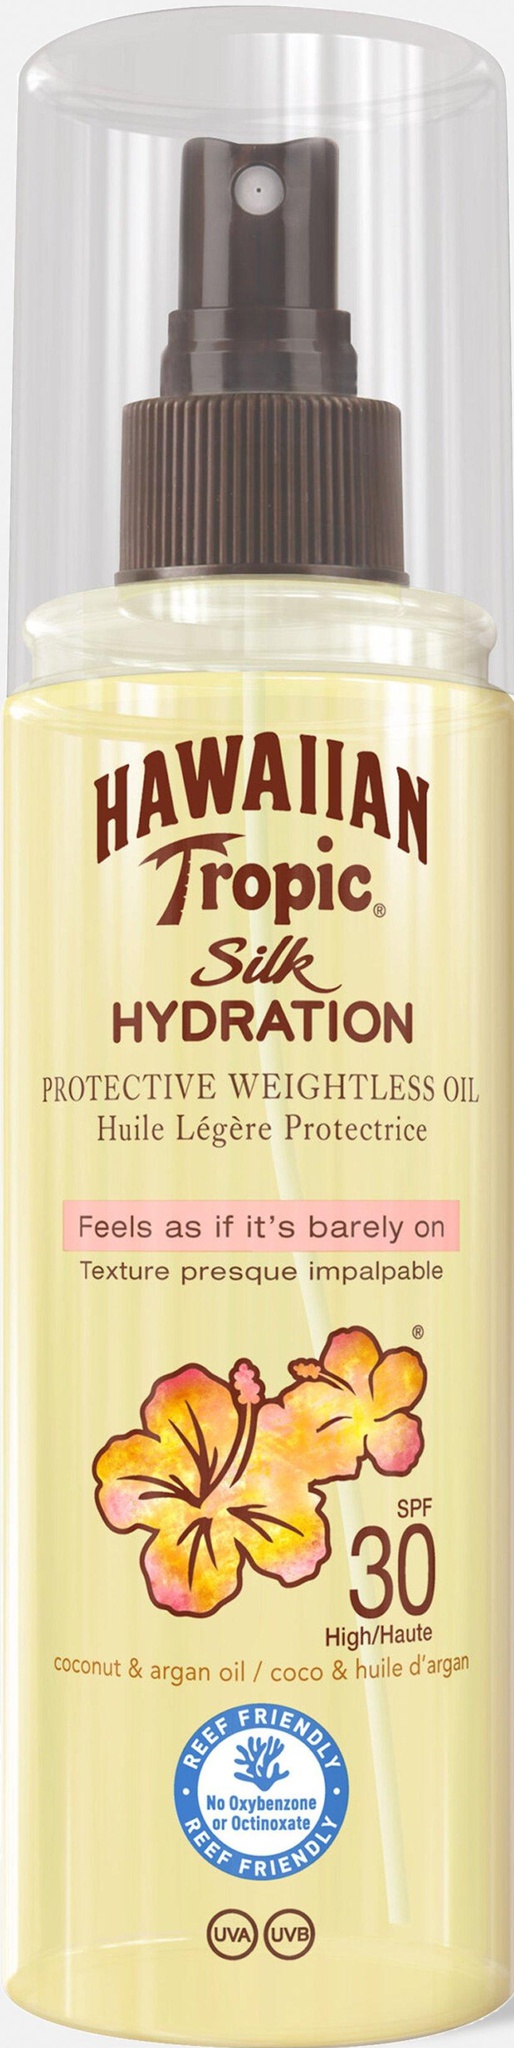 Hawaiian Tropic Silk Hydration Protective Weightless Oil SPF 30